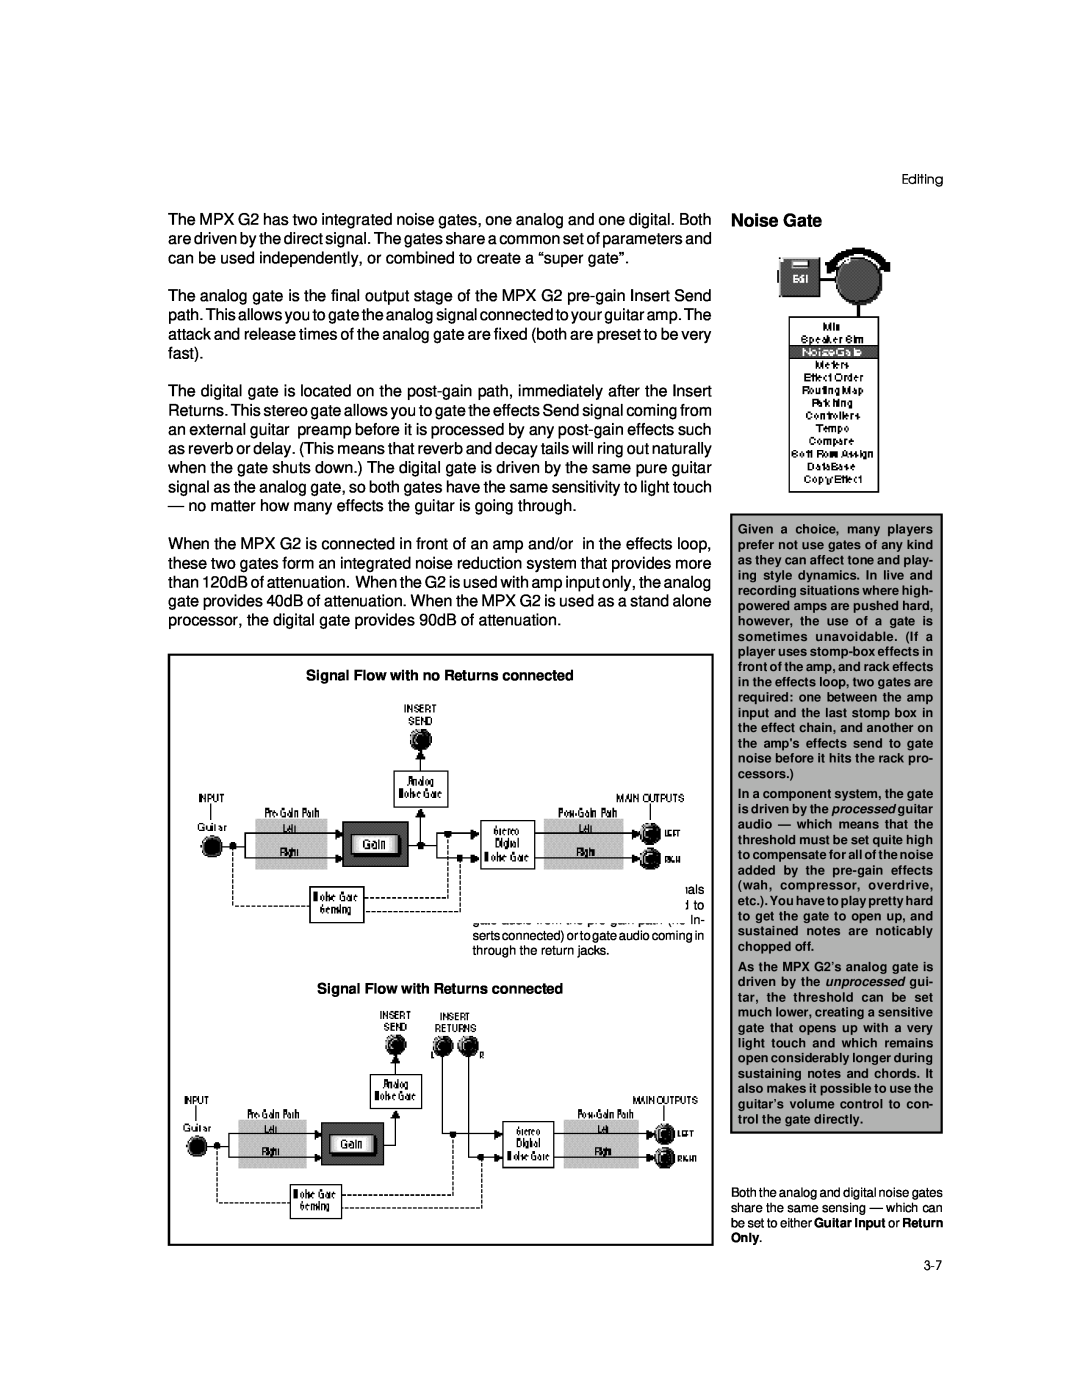 Lexicon MPX G2 manual Noise Gate, Signal Flow with no Returns connected, Signal Flow with Returns connected 